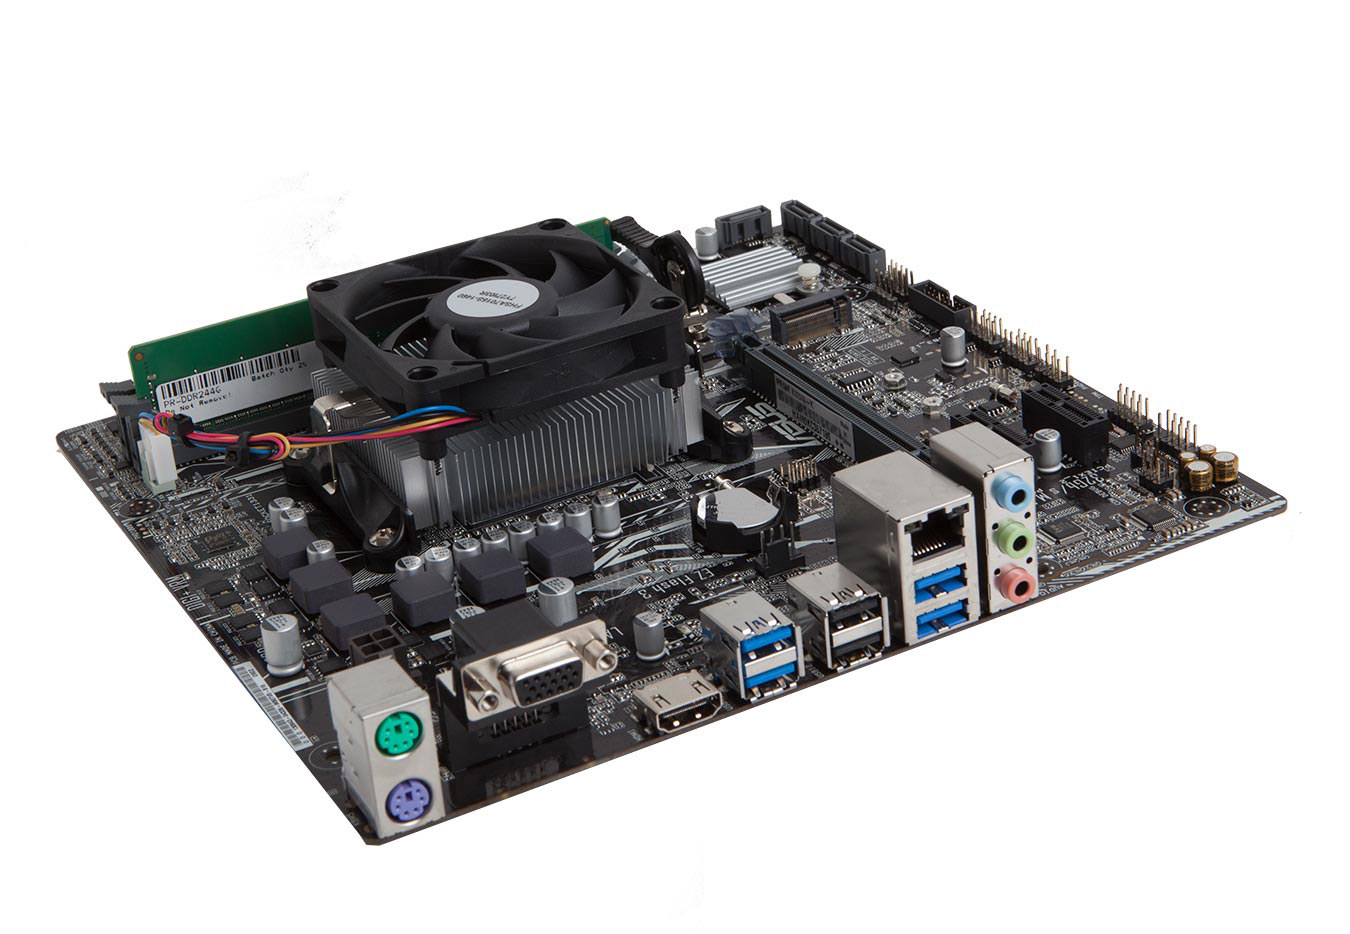 Novatech AMD A8 9600 Motherboard Bundle